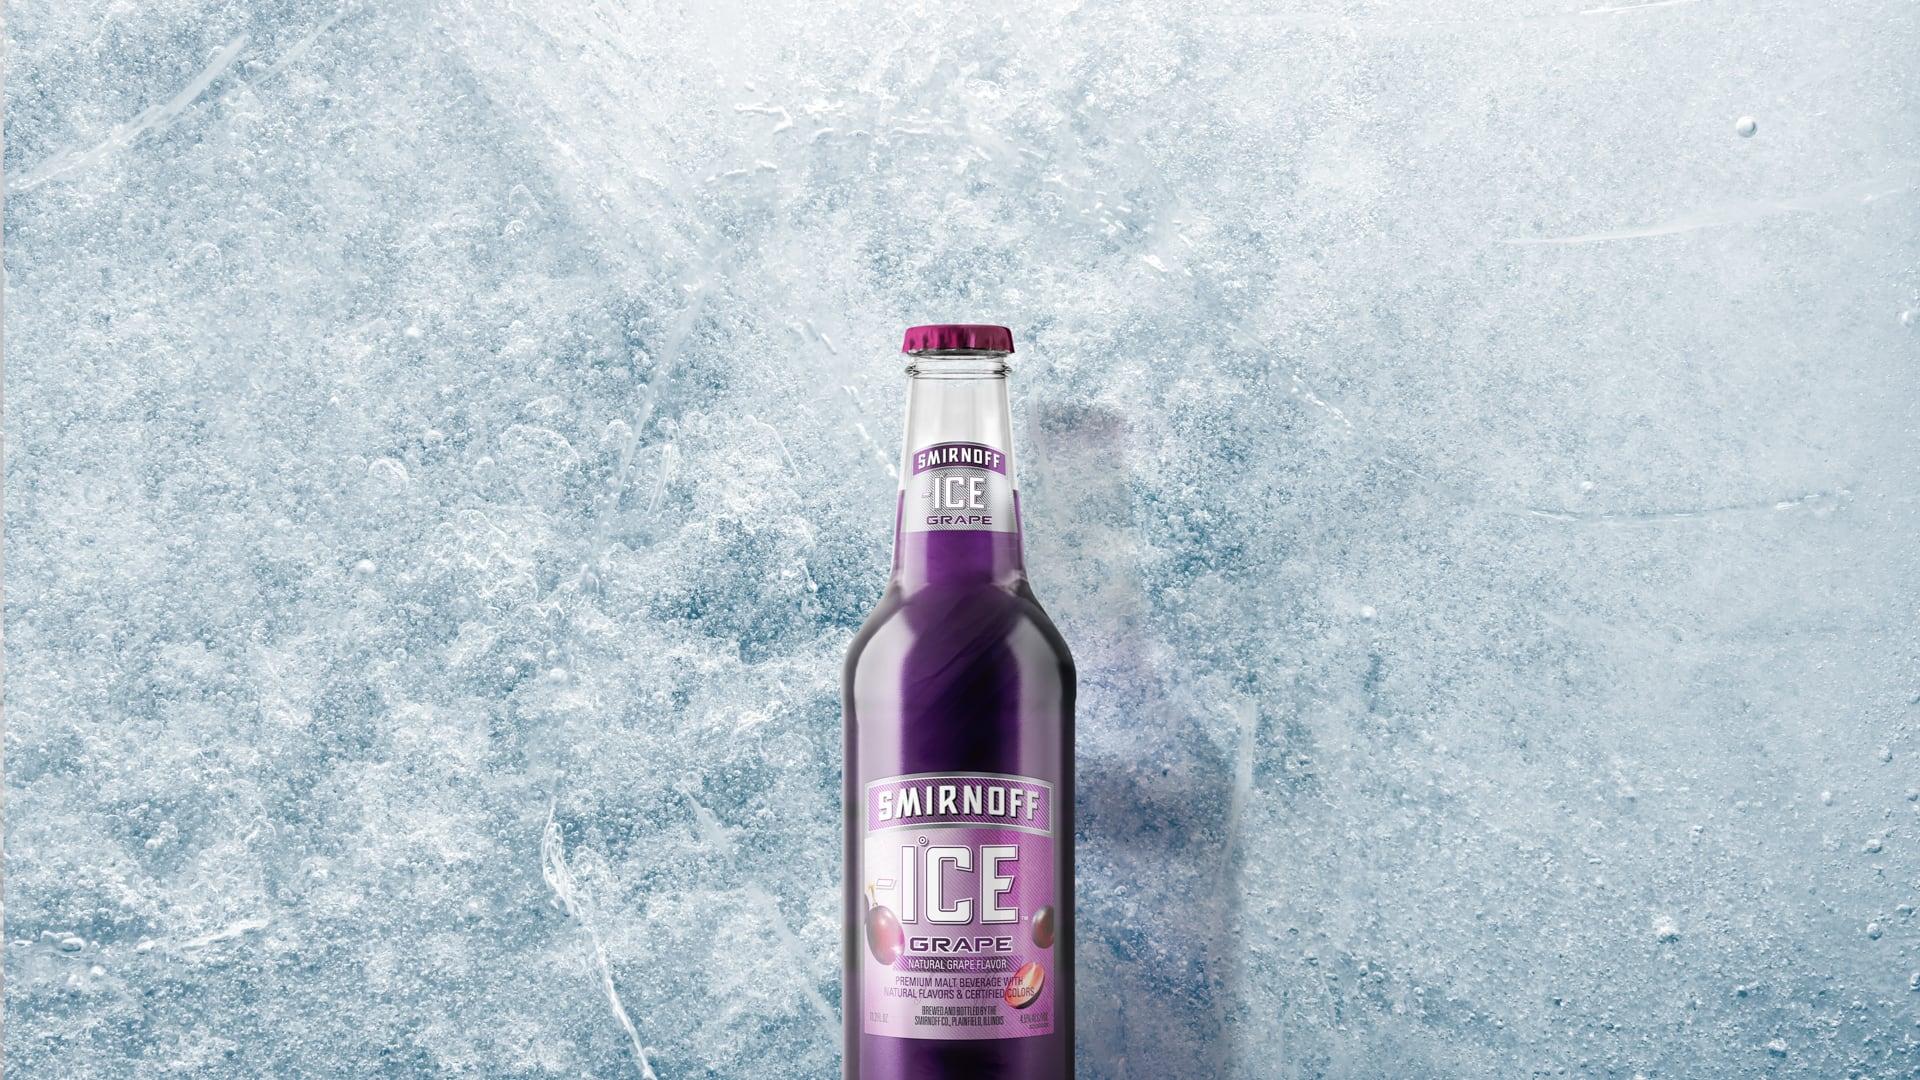 Smirnoff Ice Grape on a Icy background